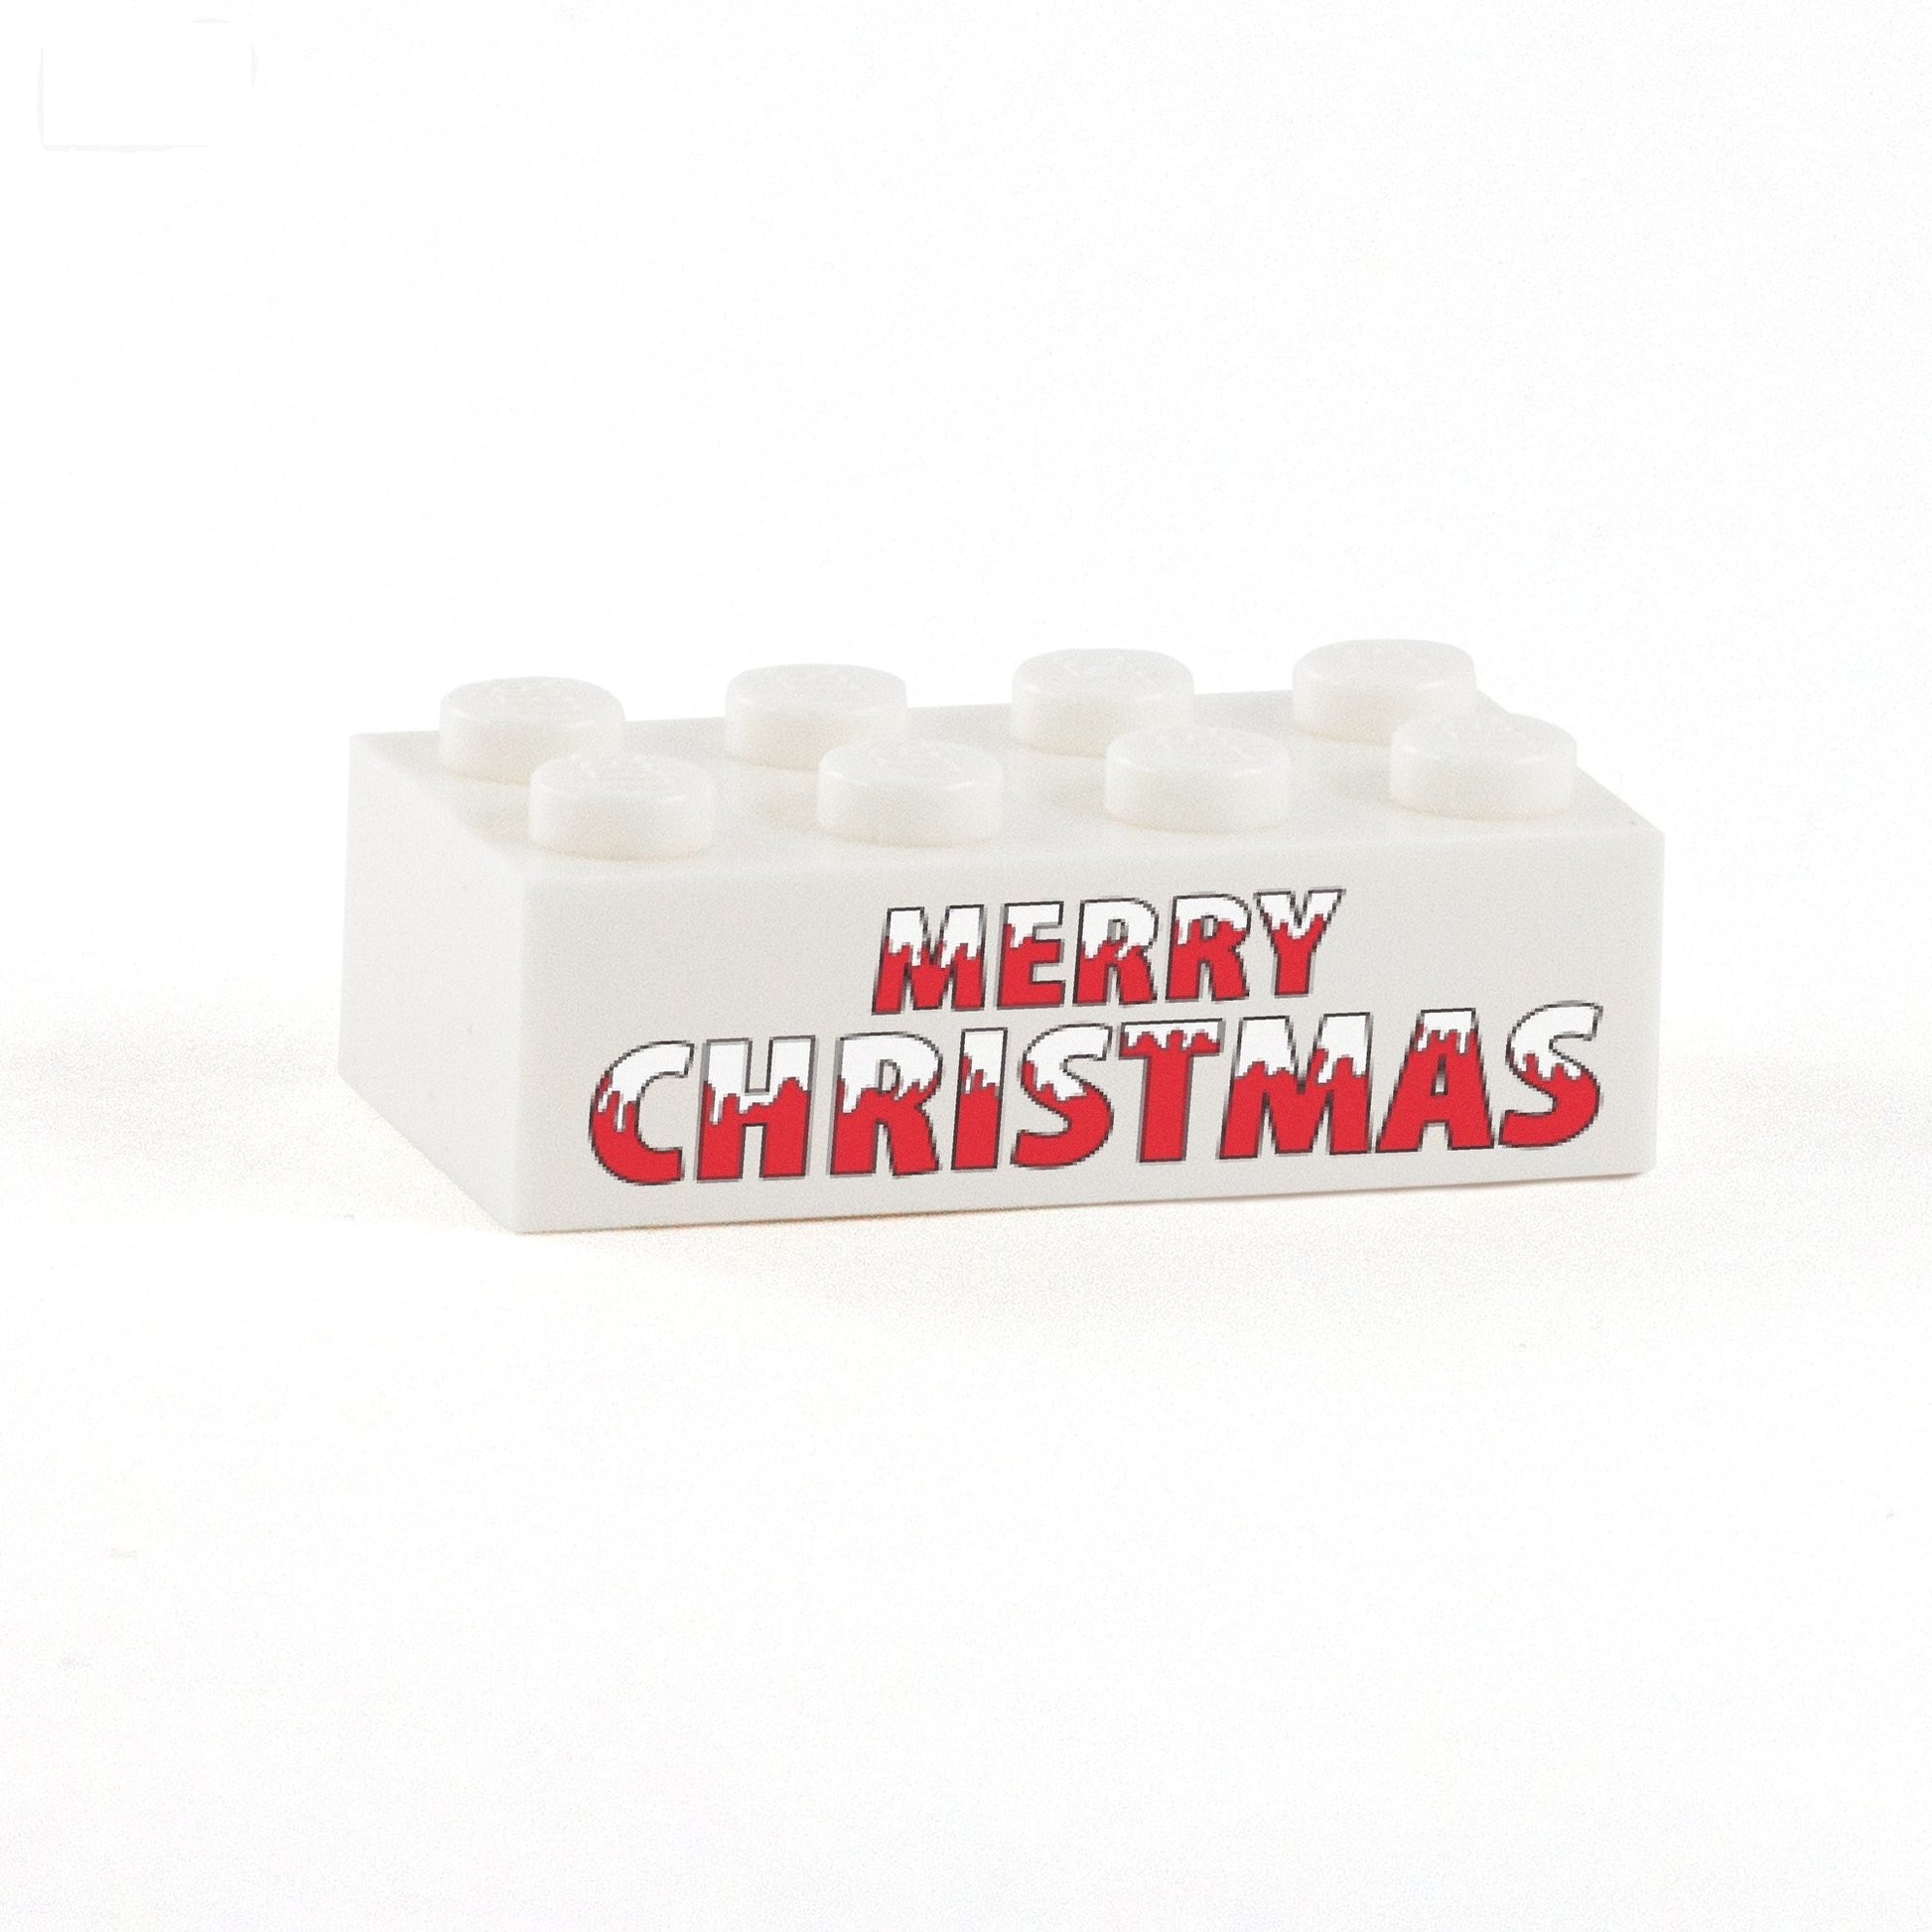 Merry Christmas Display Brick - Custom Printed 2x4 LEGO Brick